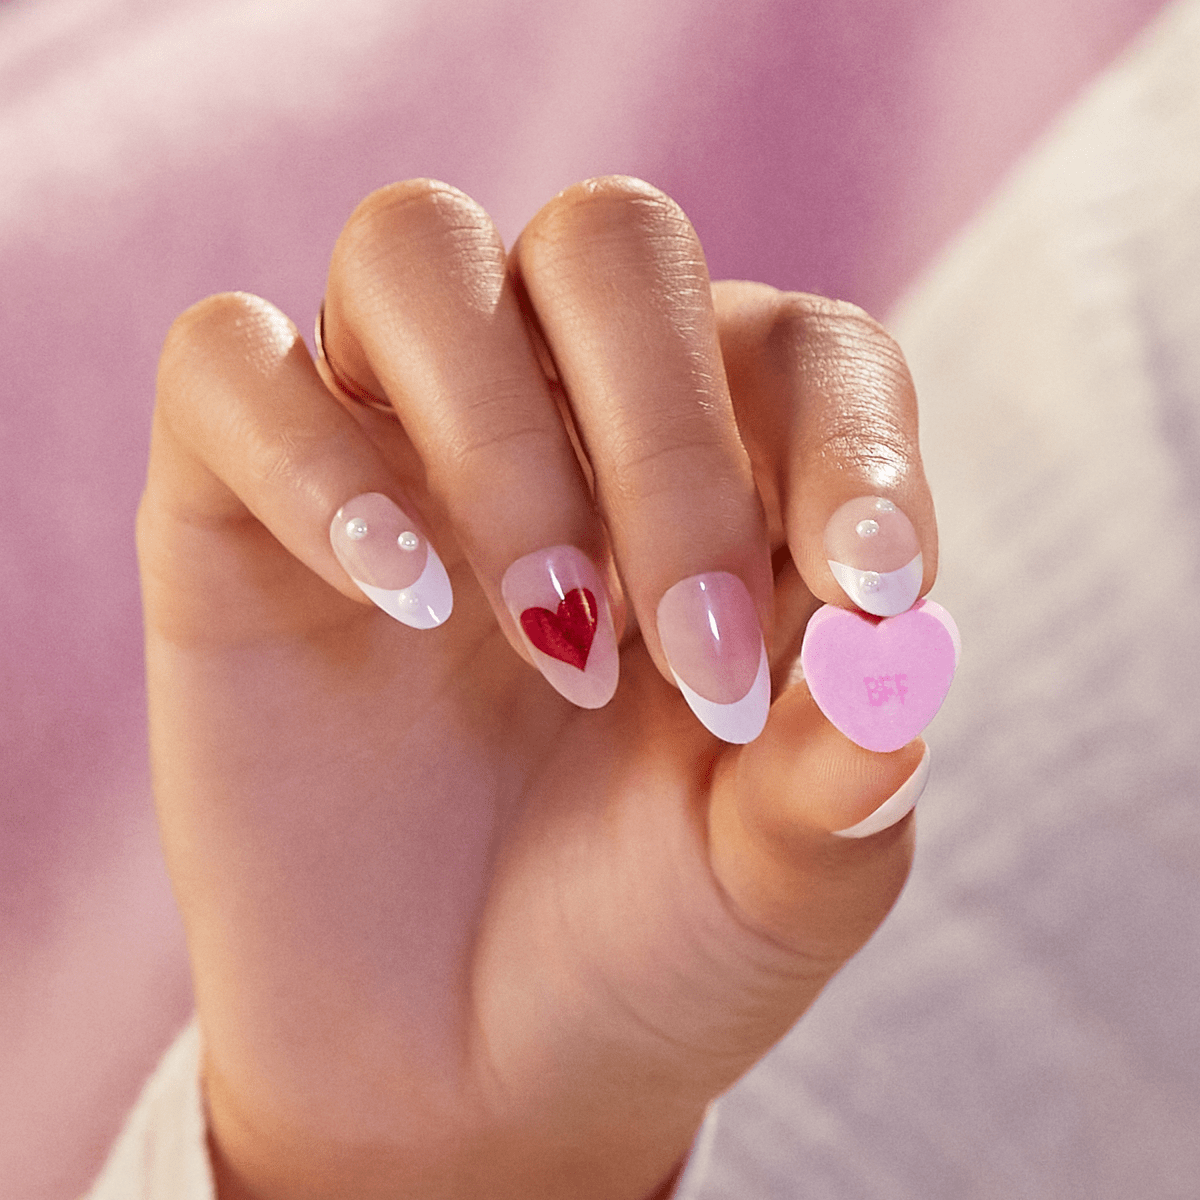 imPRESS Press-On Manicure Valentine Nails - Love Like This